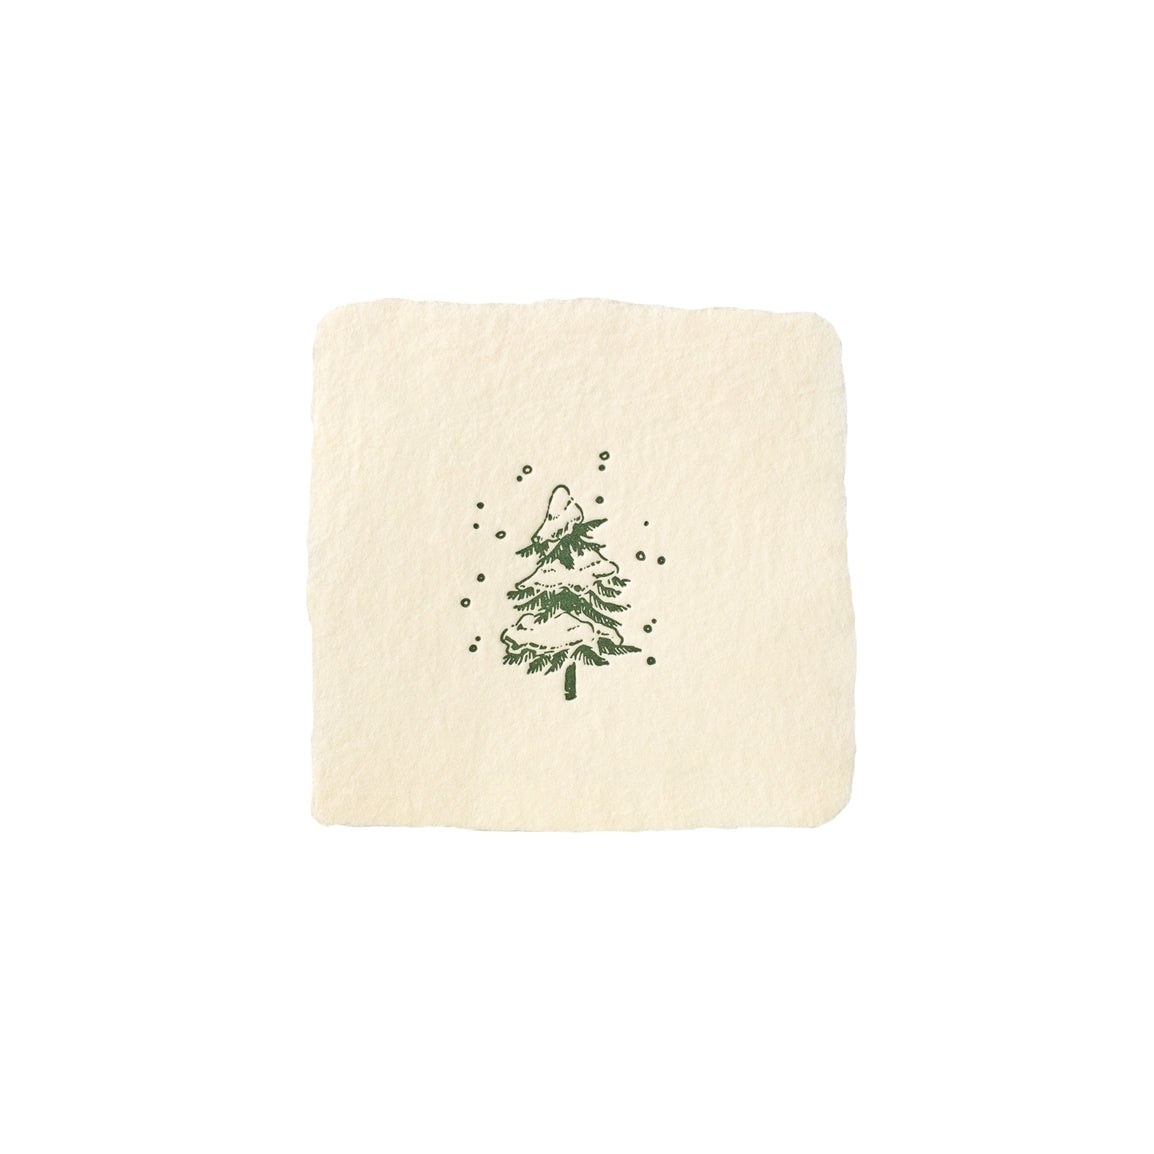 Snowy Pine Tree Handmade Paper Letterpress Petite Charm